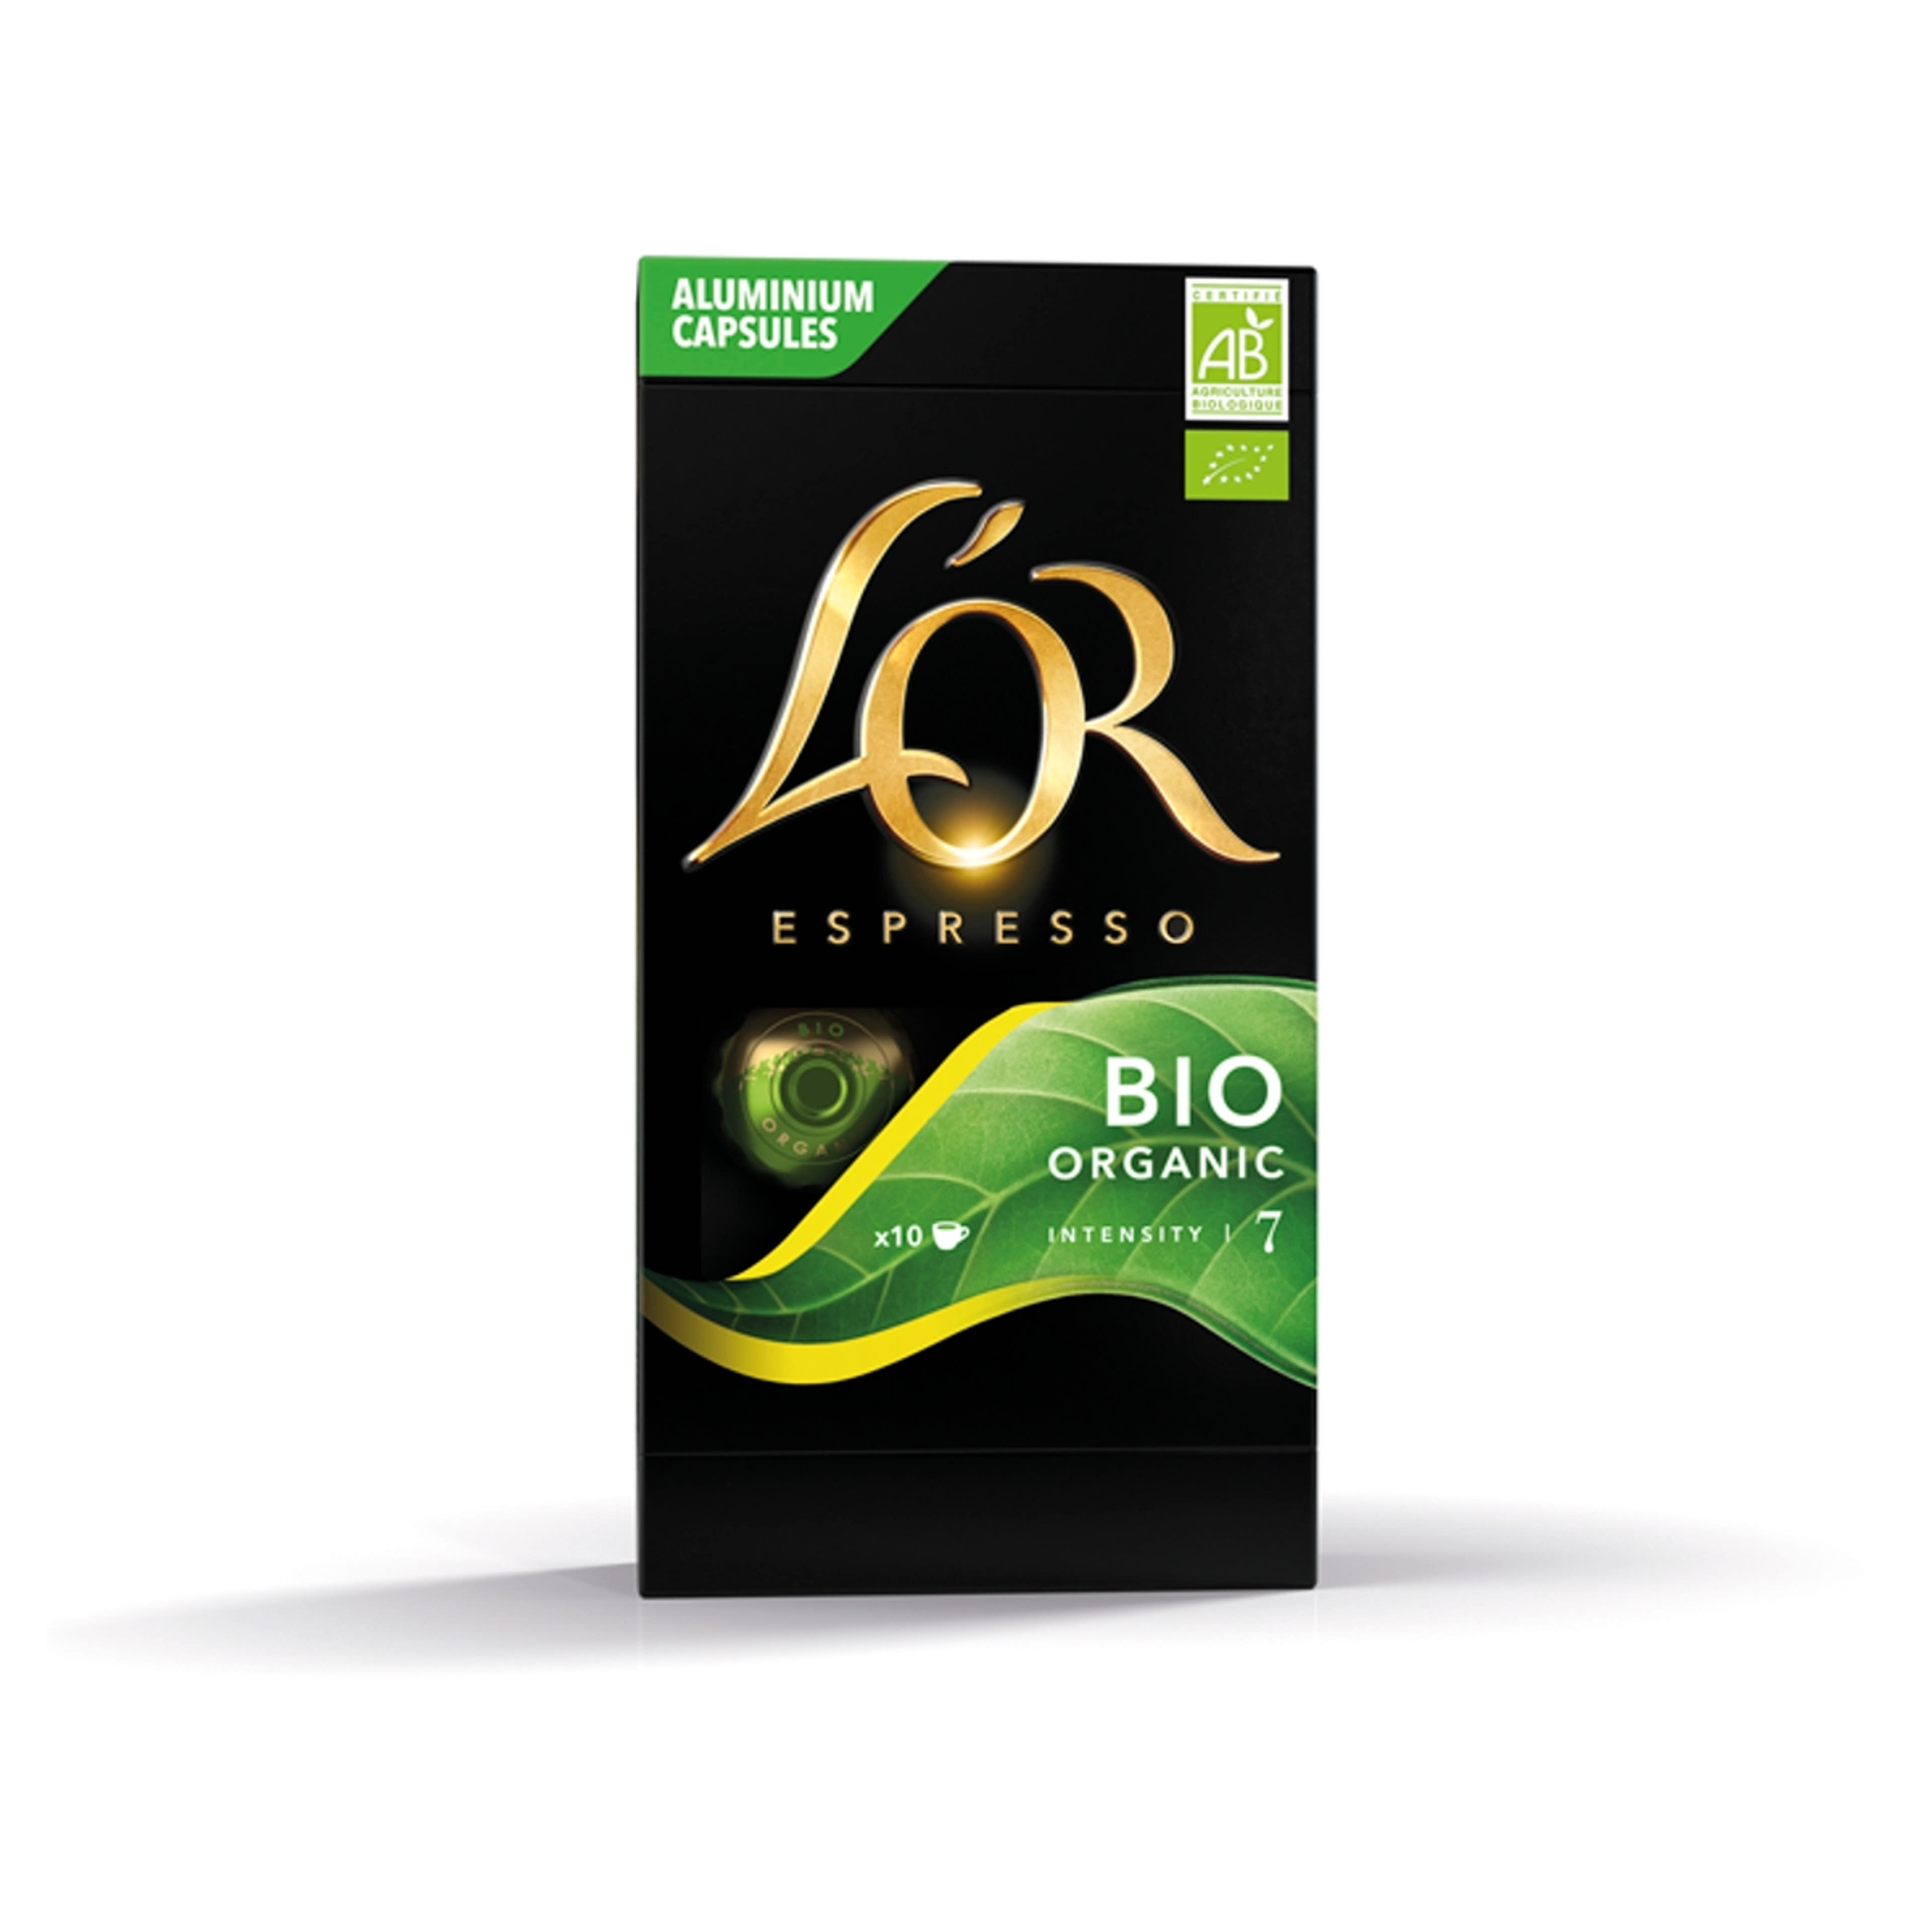 Lor bio organic espresso kapszula - 10 db